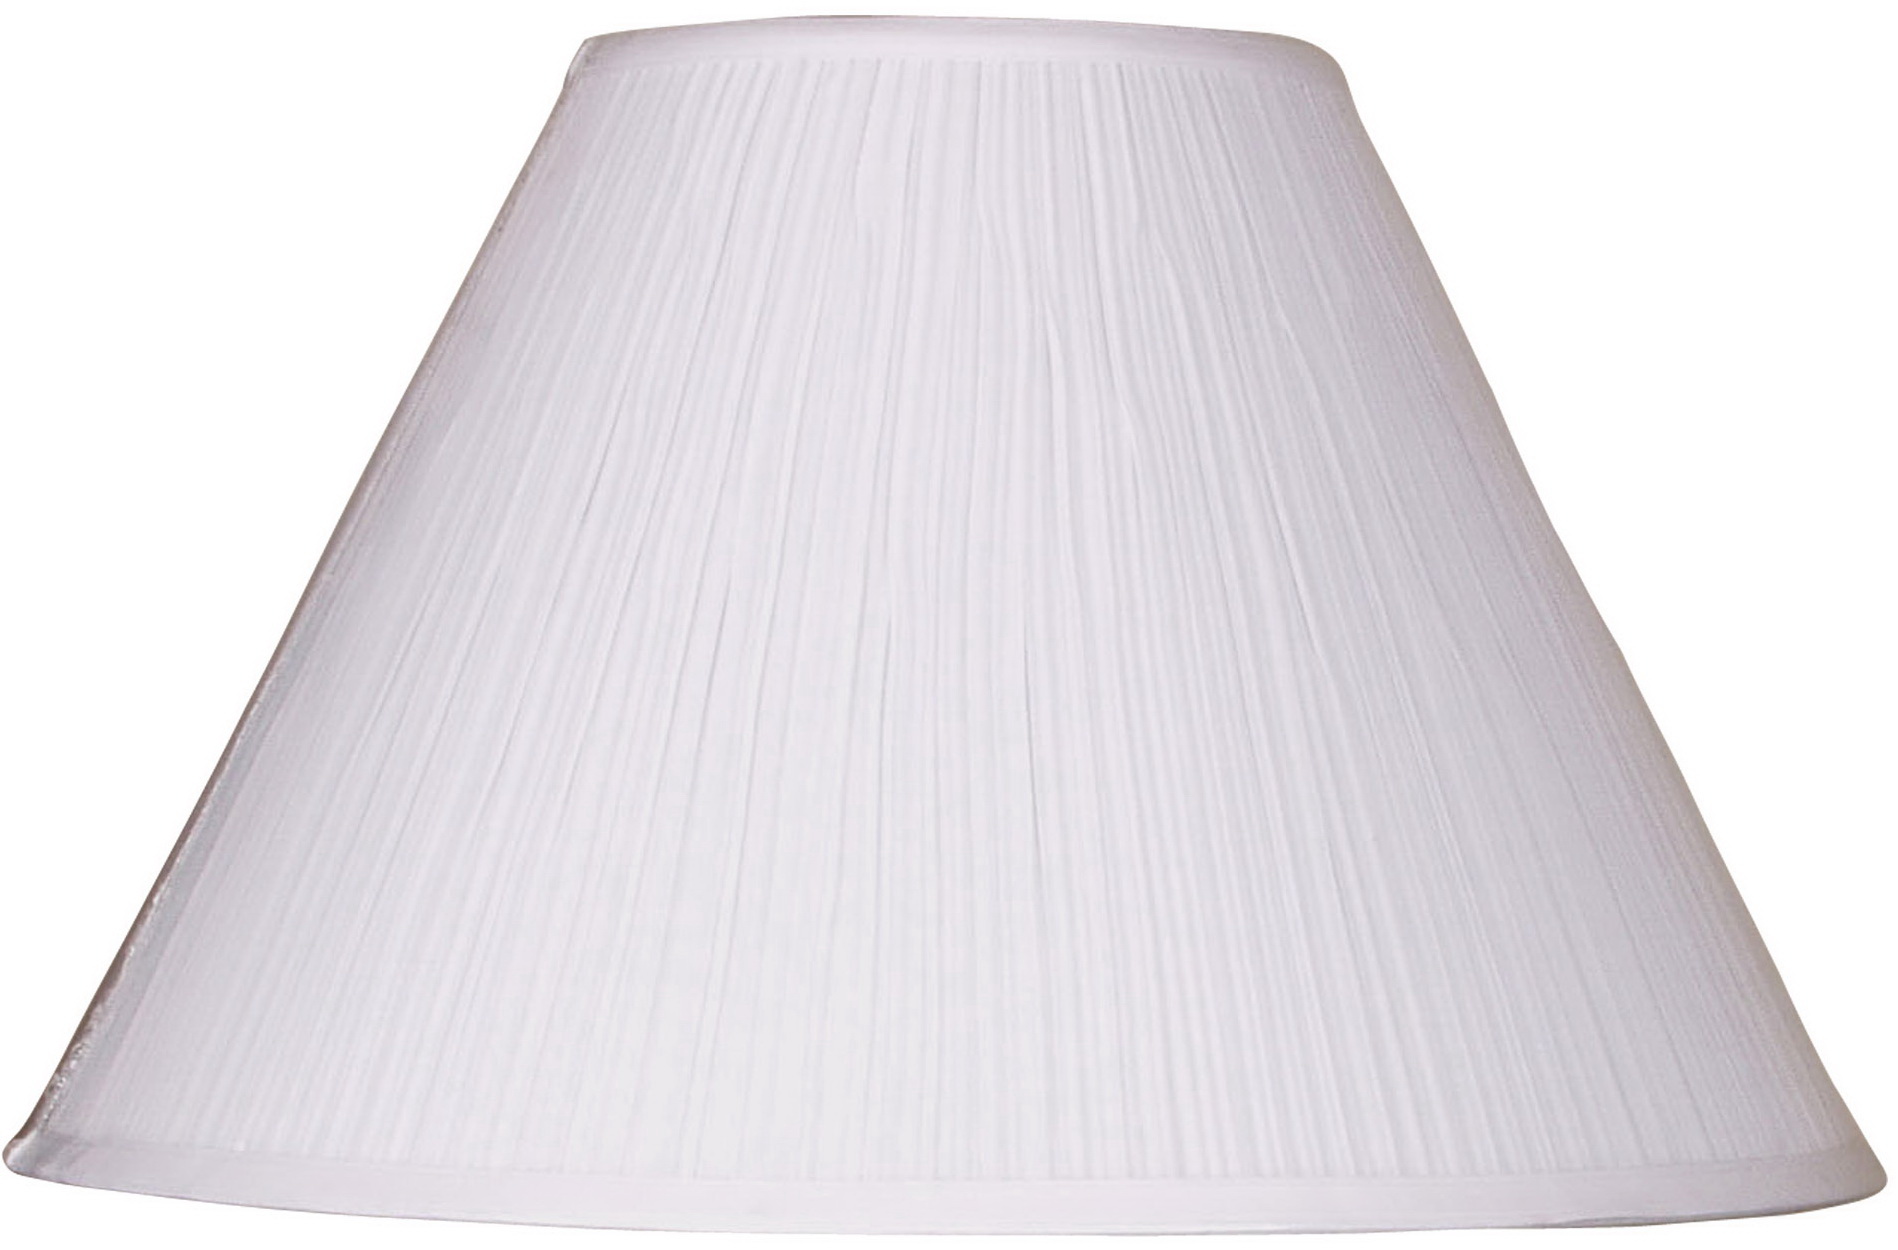 Mainstays 18" Soft Pleat Empire Lamp Shade, White - image 1 of 8